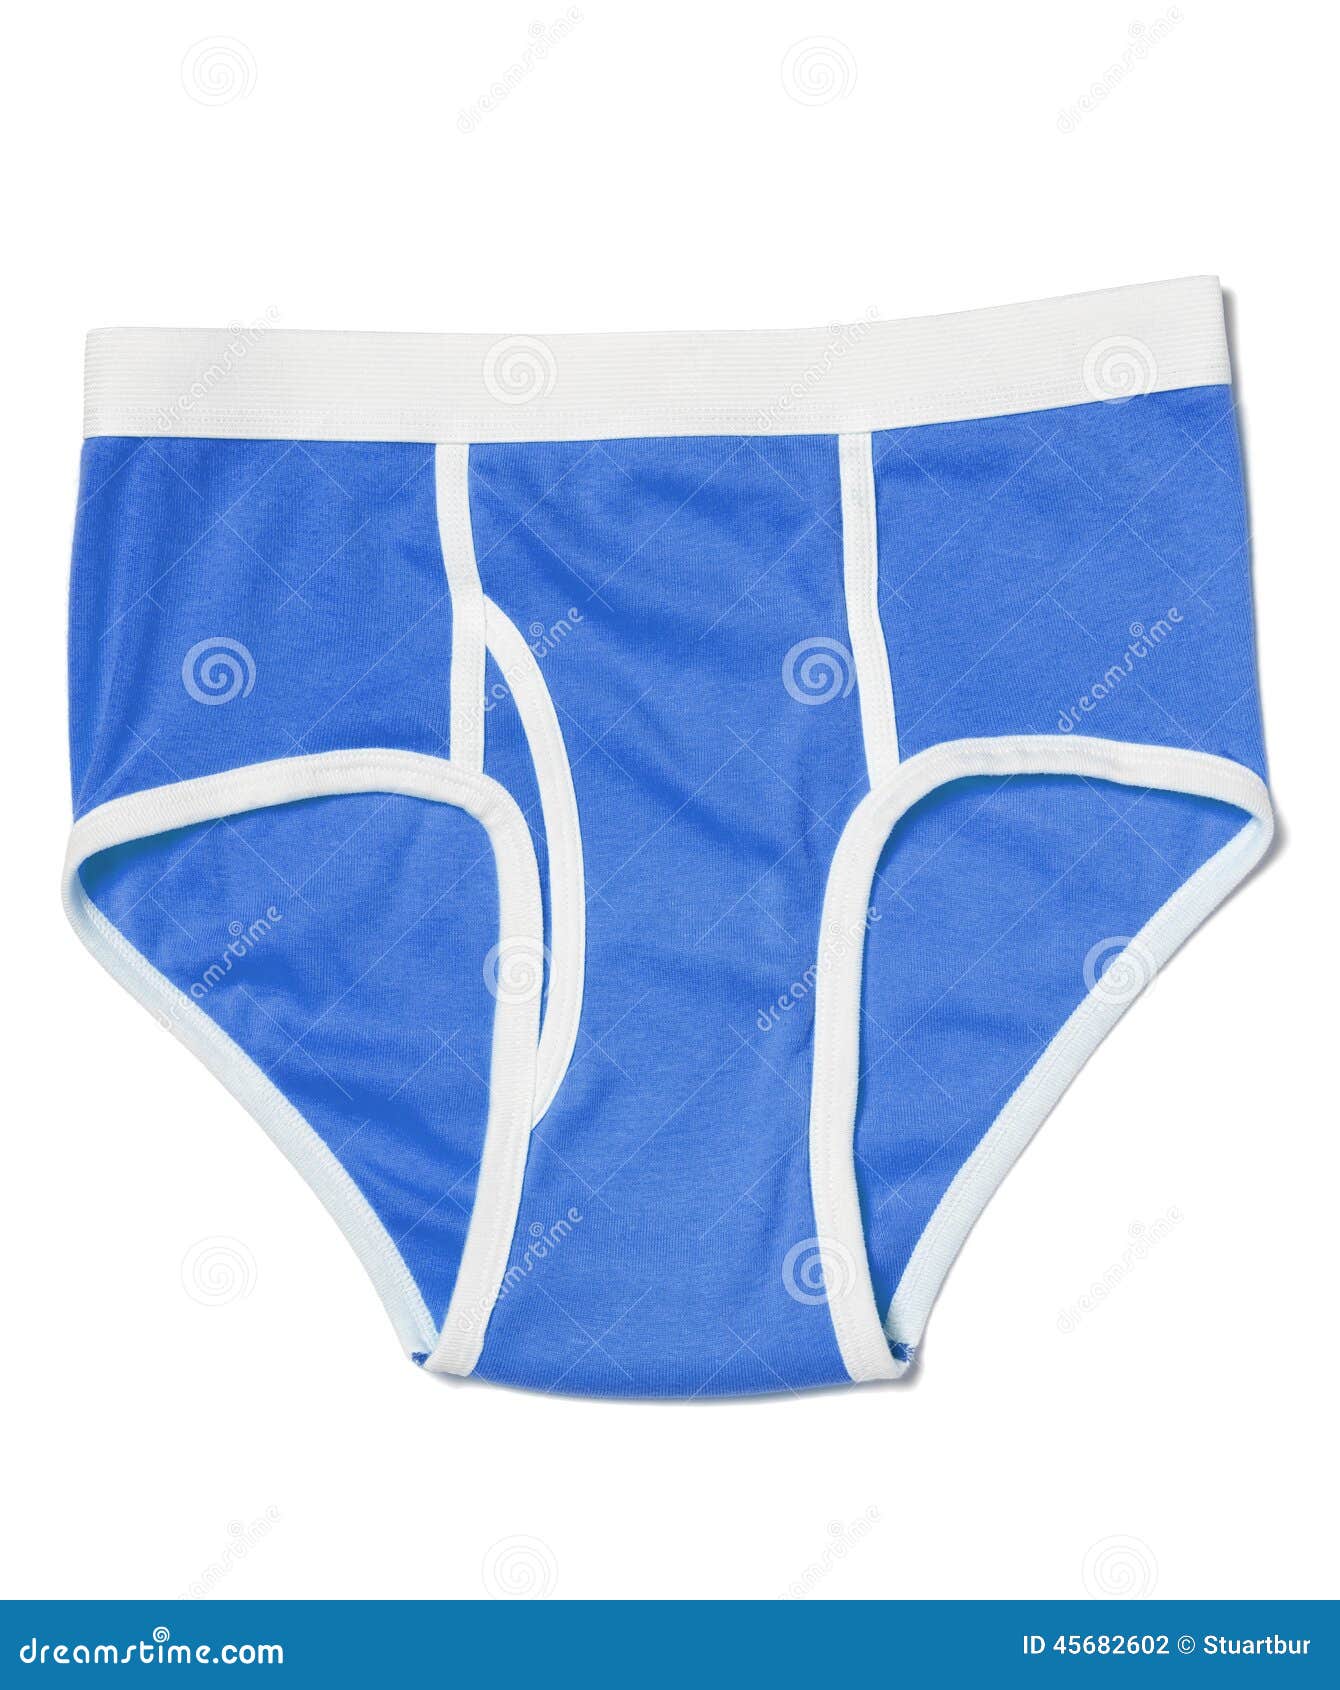 Y-fronts stock photo. Image of pants, blue, wear, underwear - 45682602